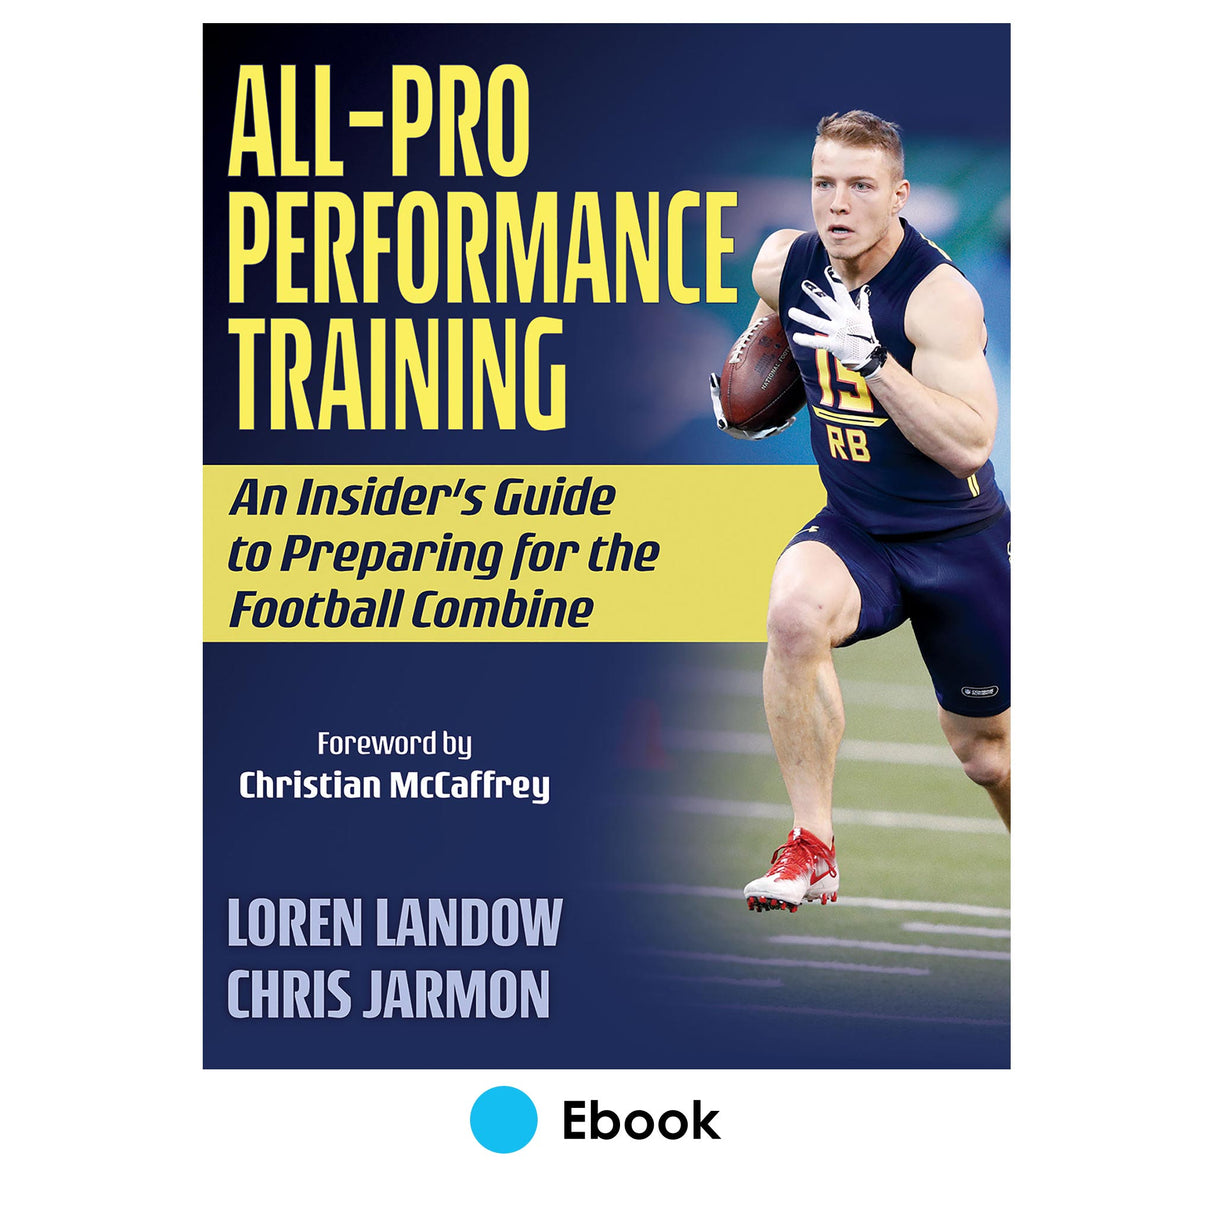 All-Pro Performance Training epub